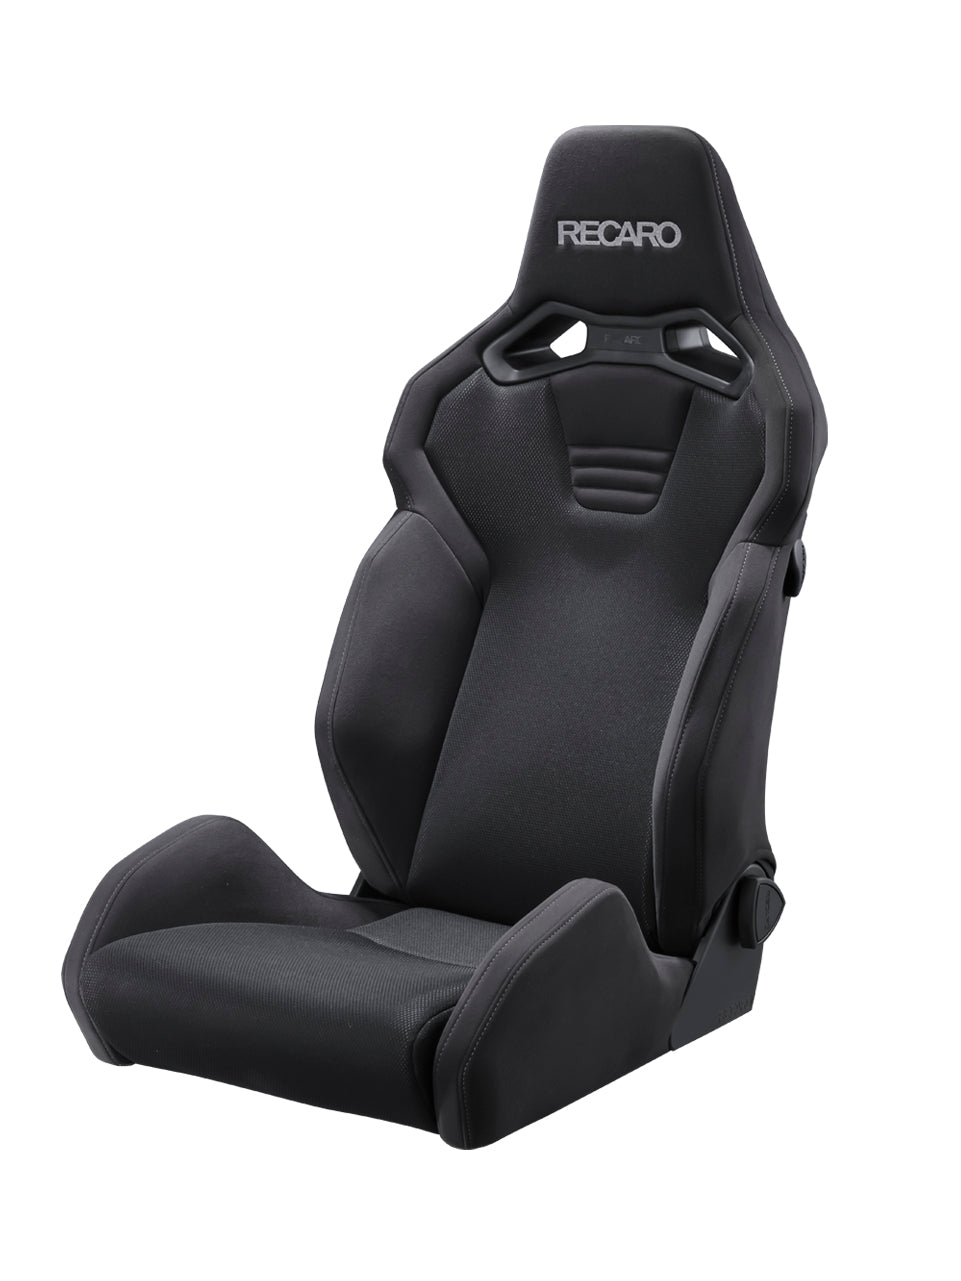 RECARO SR S BK100 BK BK BRILLIANT MESH BLACK AND BLACK COLOR WITH HEATED SEATS 81-120.21.640-0